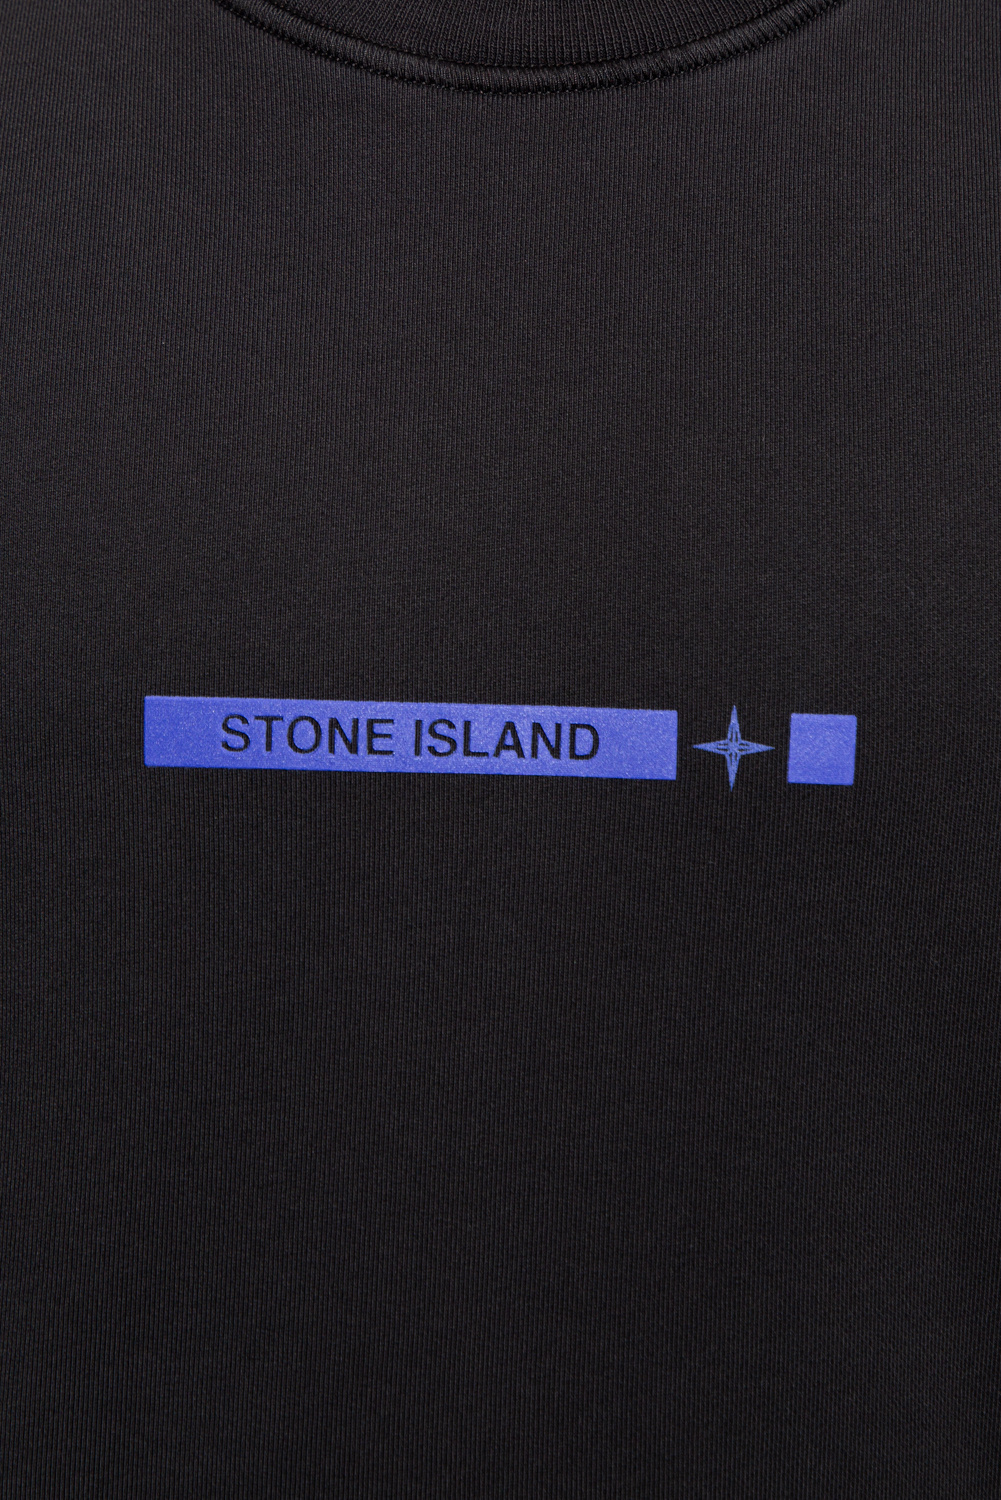 Stone Island Ted Baker Geblümtes T-Shirt in Marine